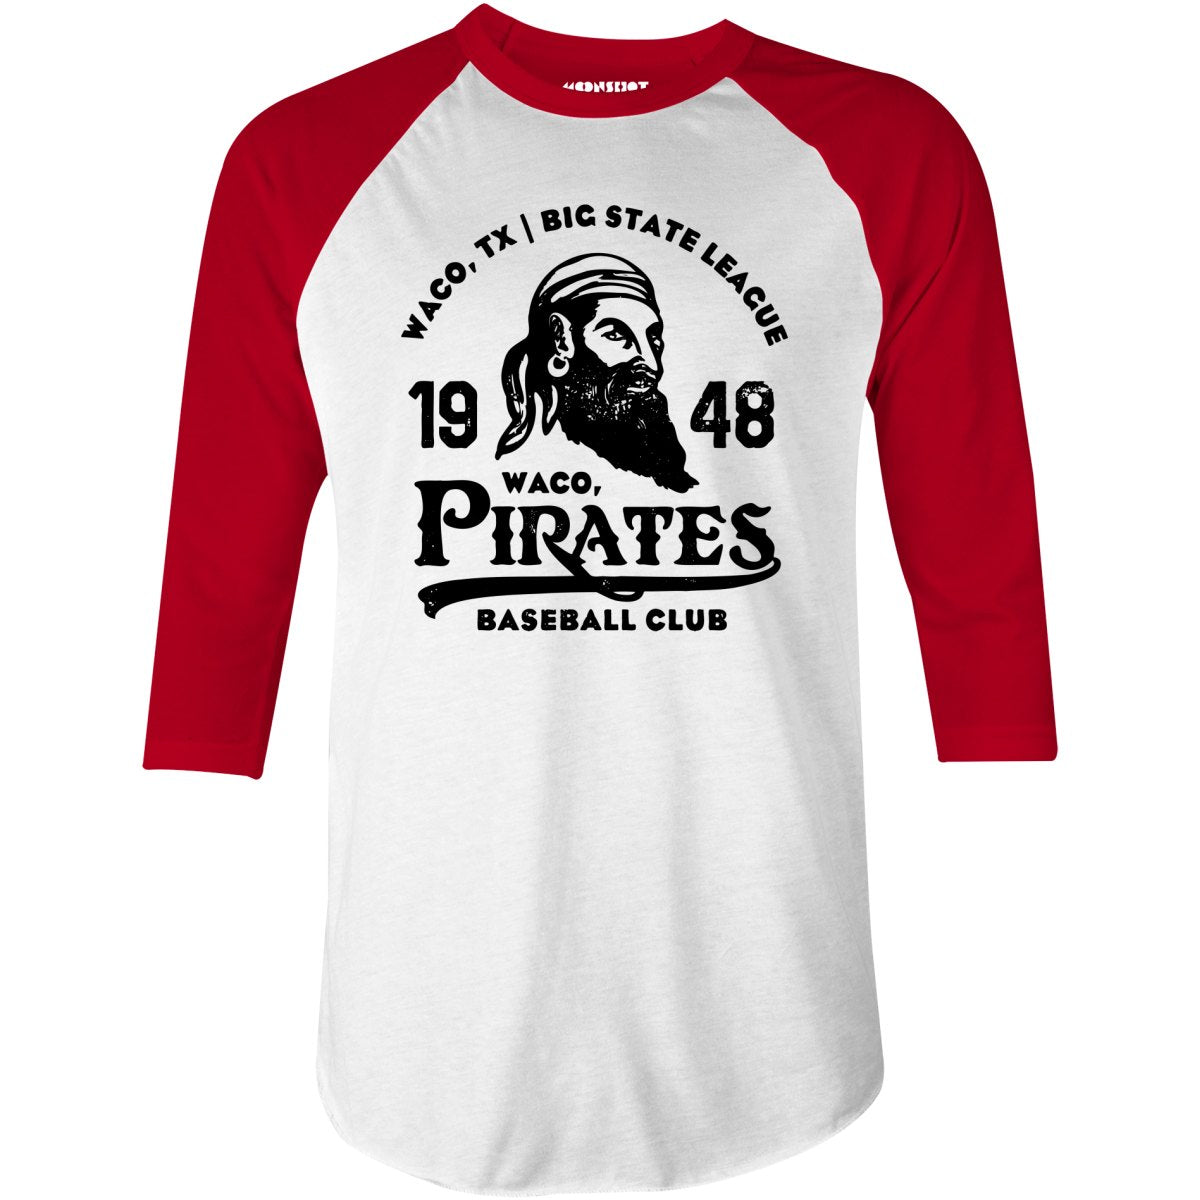 Waco Pirates - Texas - Vintage Defunct Baseball Teams - Unisex T-Shirt